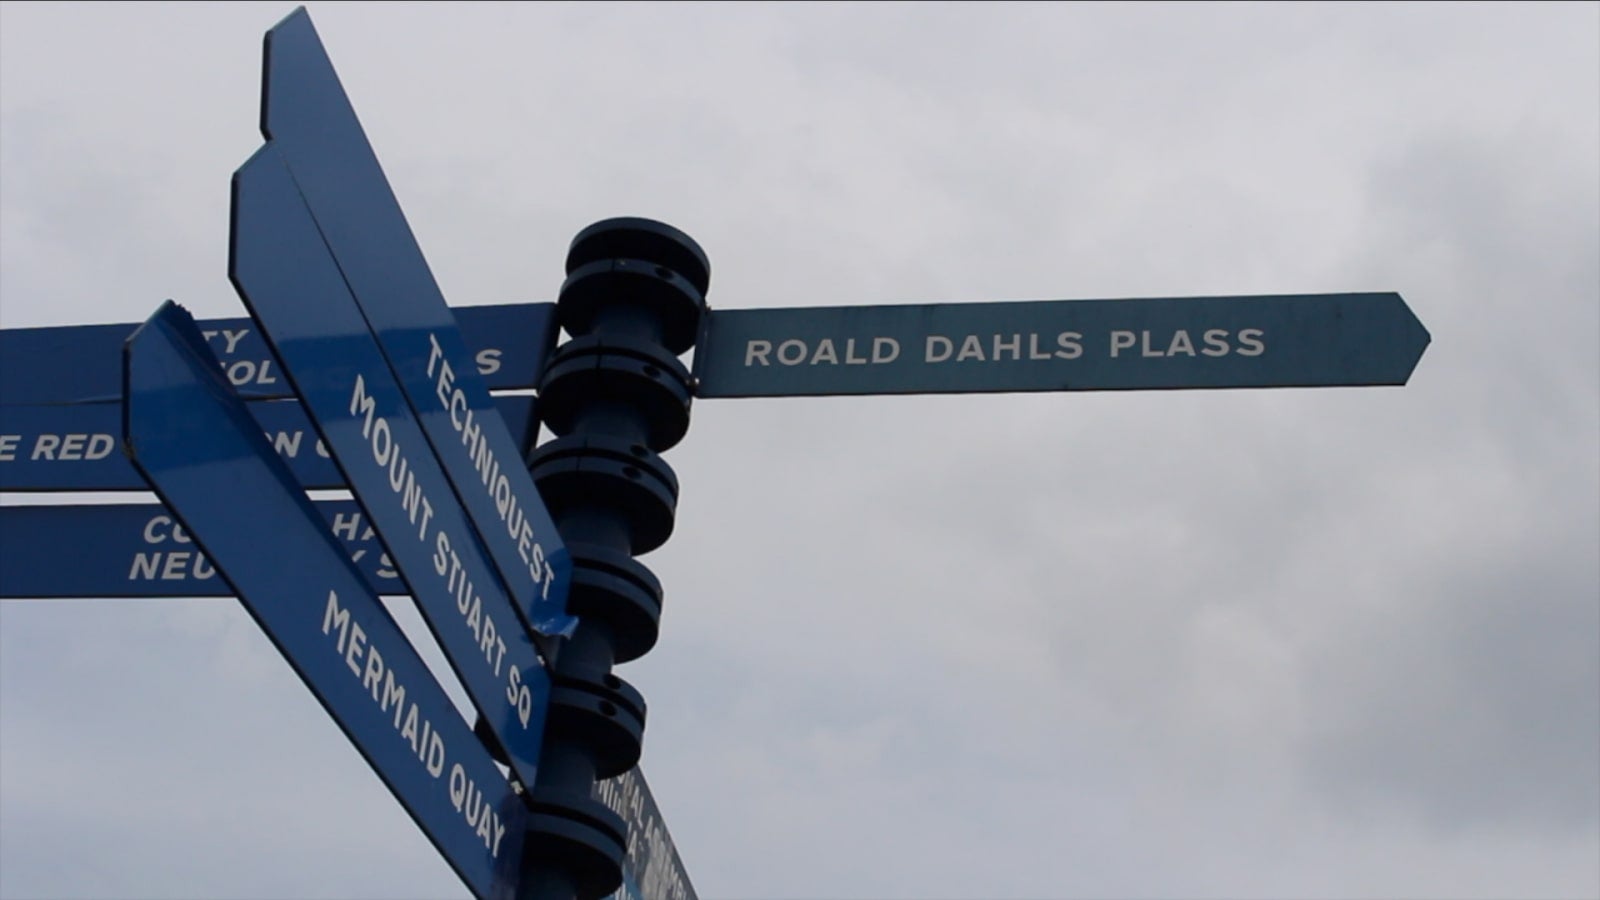 Roald Dahl Plass sign, Cardiff